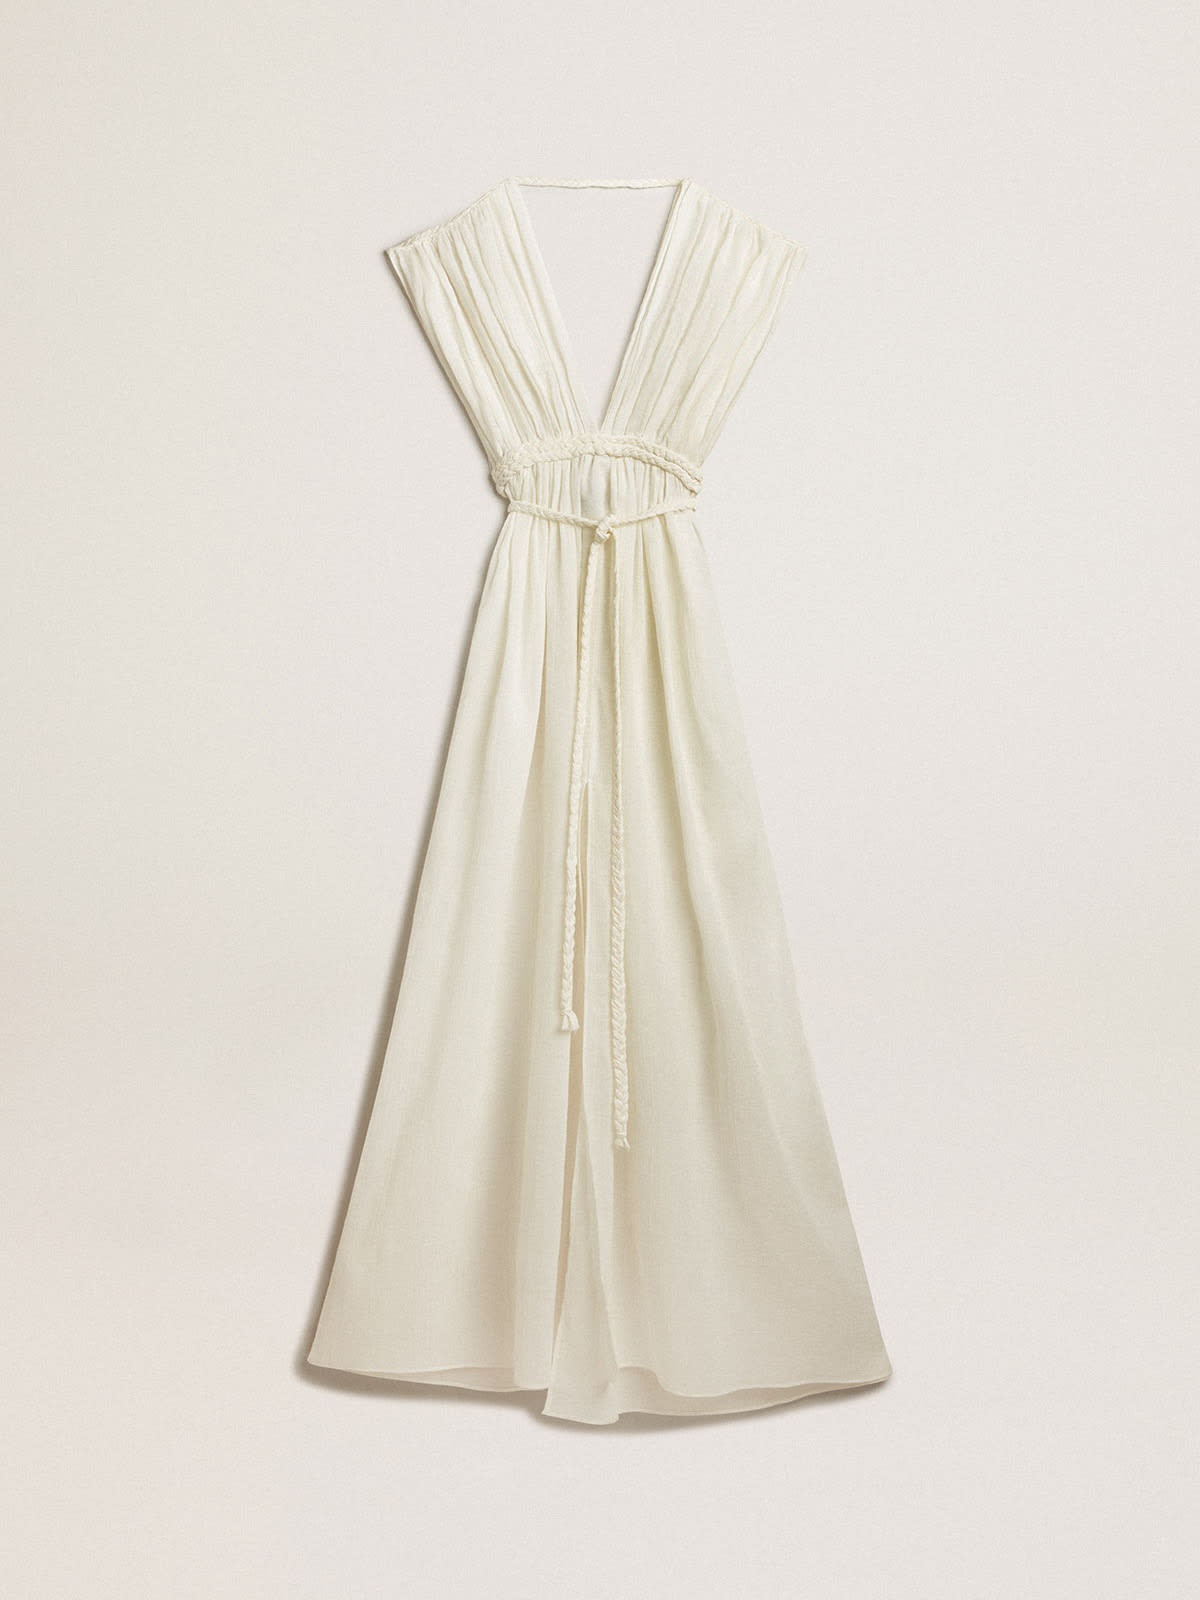 Kaftan dress in aged white jacquard cotton - 1